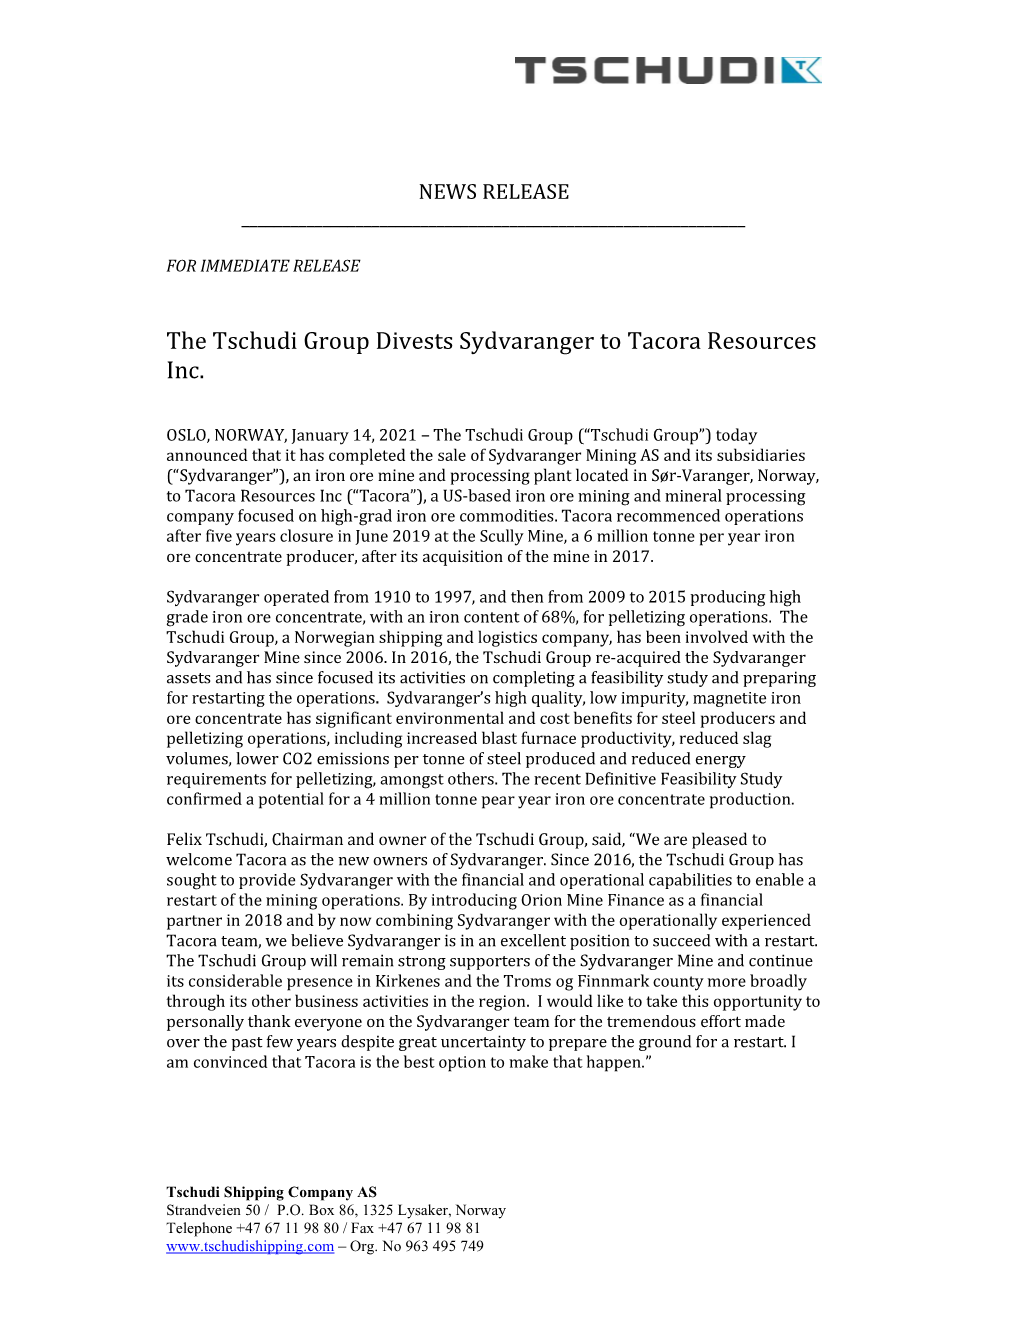 The Tschudi Group Divests Sydvaranger to Tacora Resources Inc